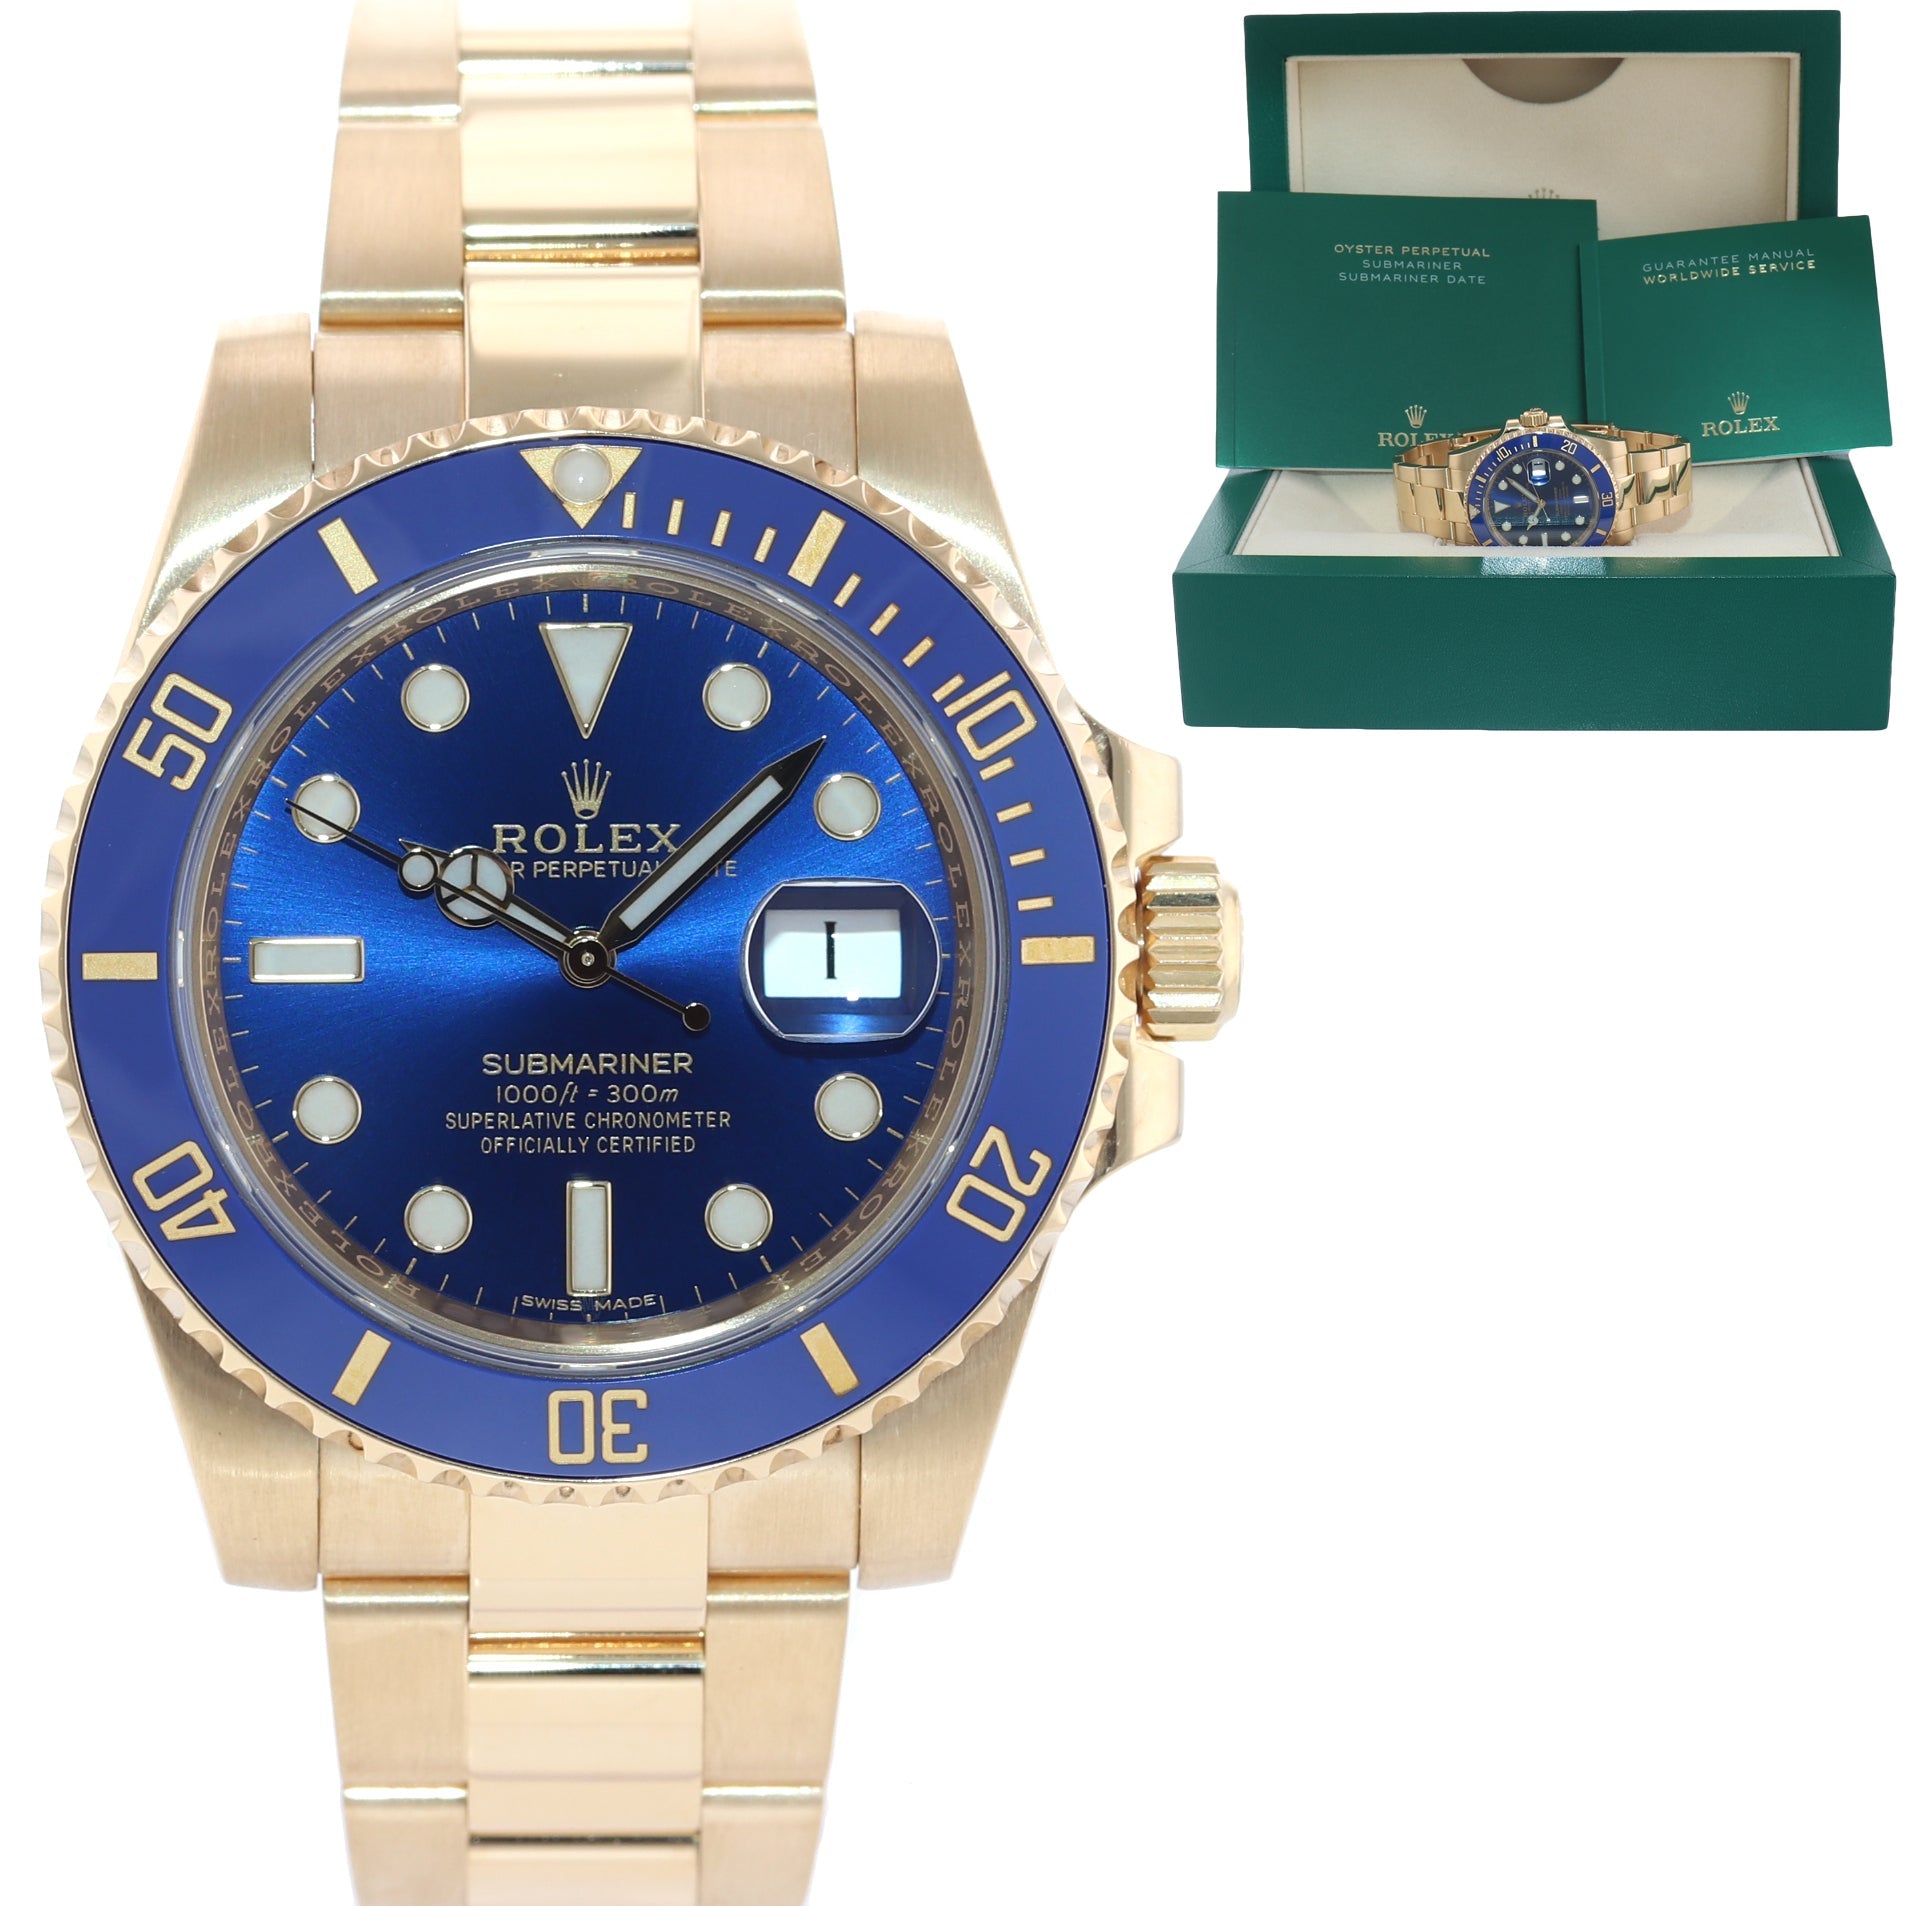 Discontinued 2019 Rolex Sunburst Blue Ceramic 116618 Yellow Gold 40mm Watch Box